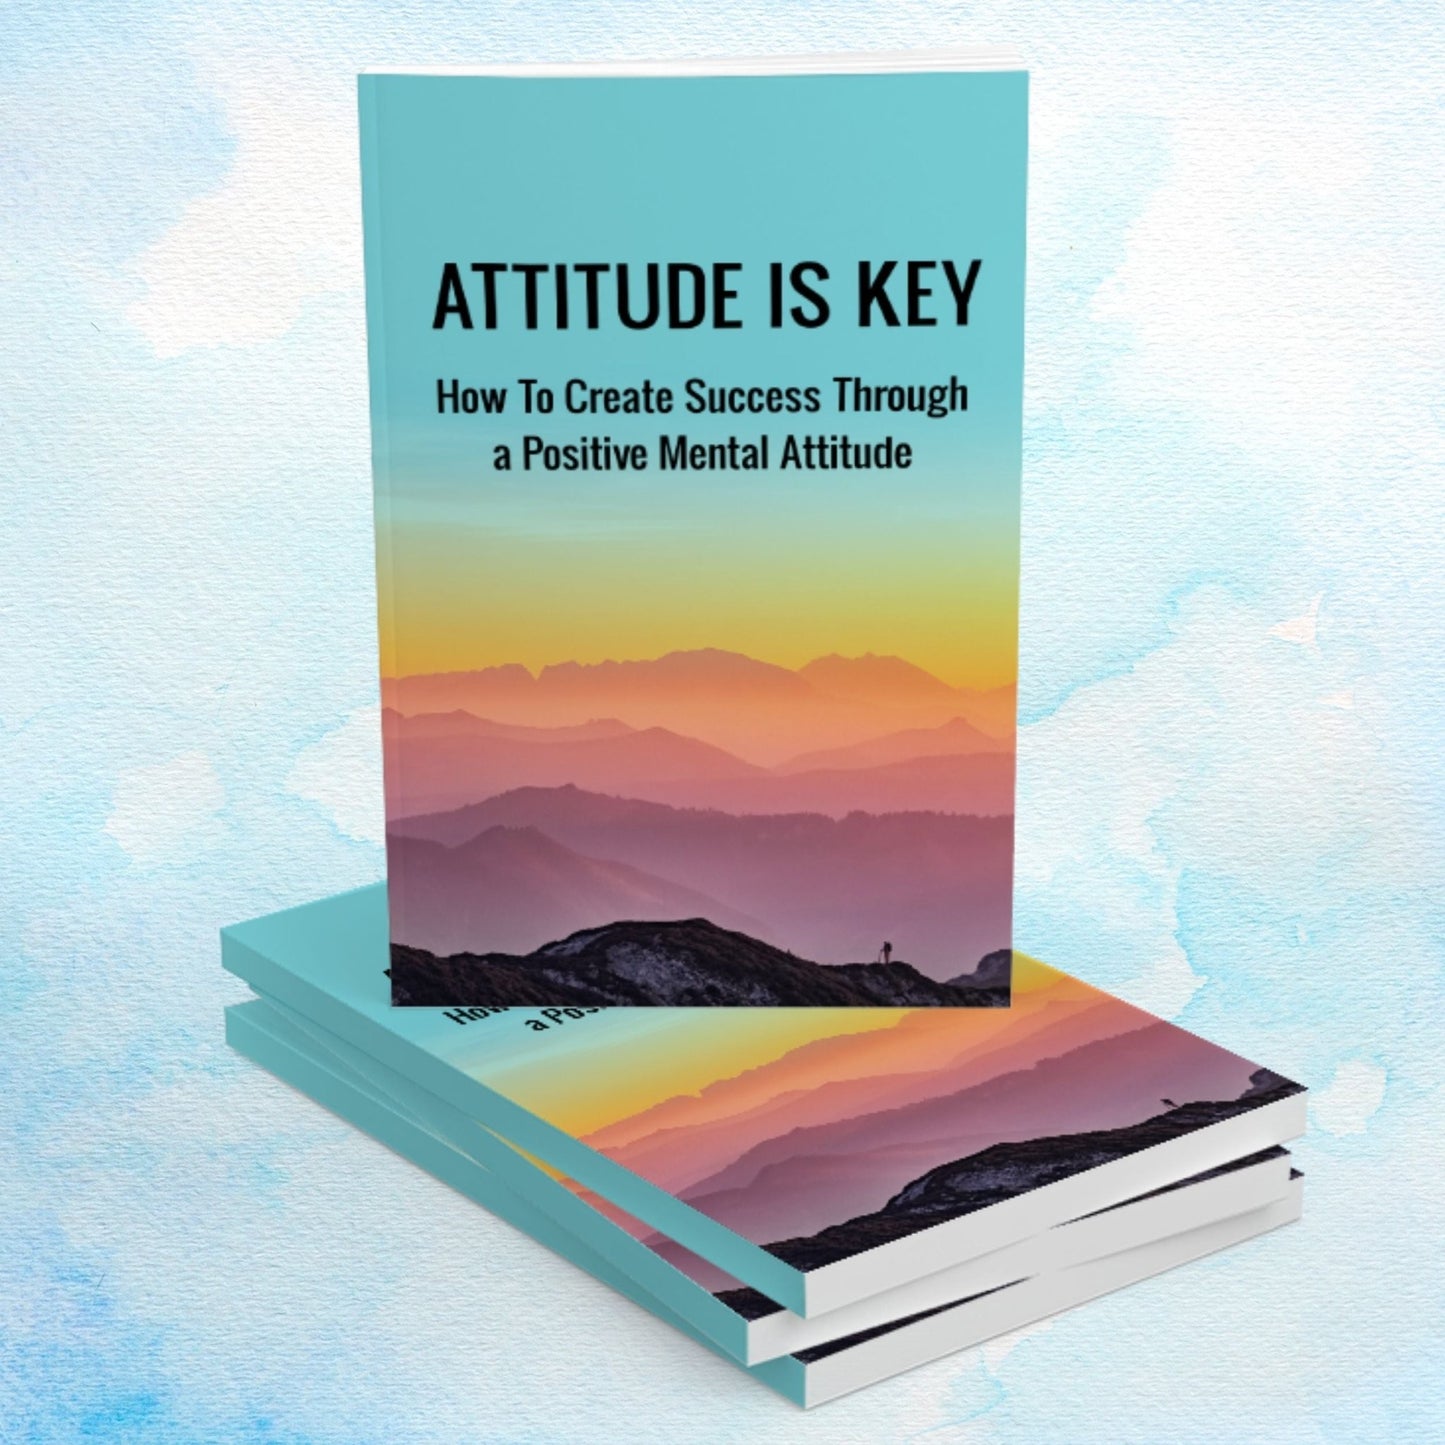 The Power of a Positive Attitude eBook (DIGITAL DOWNLOAD) ebook Weaver Custom Engravings Digital Downloads   